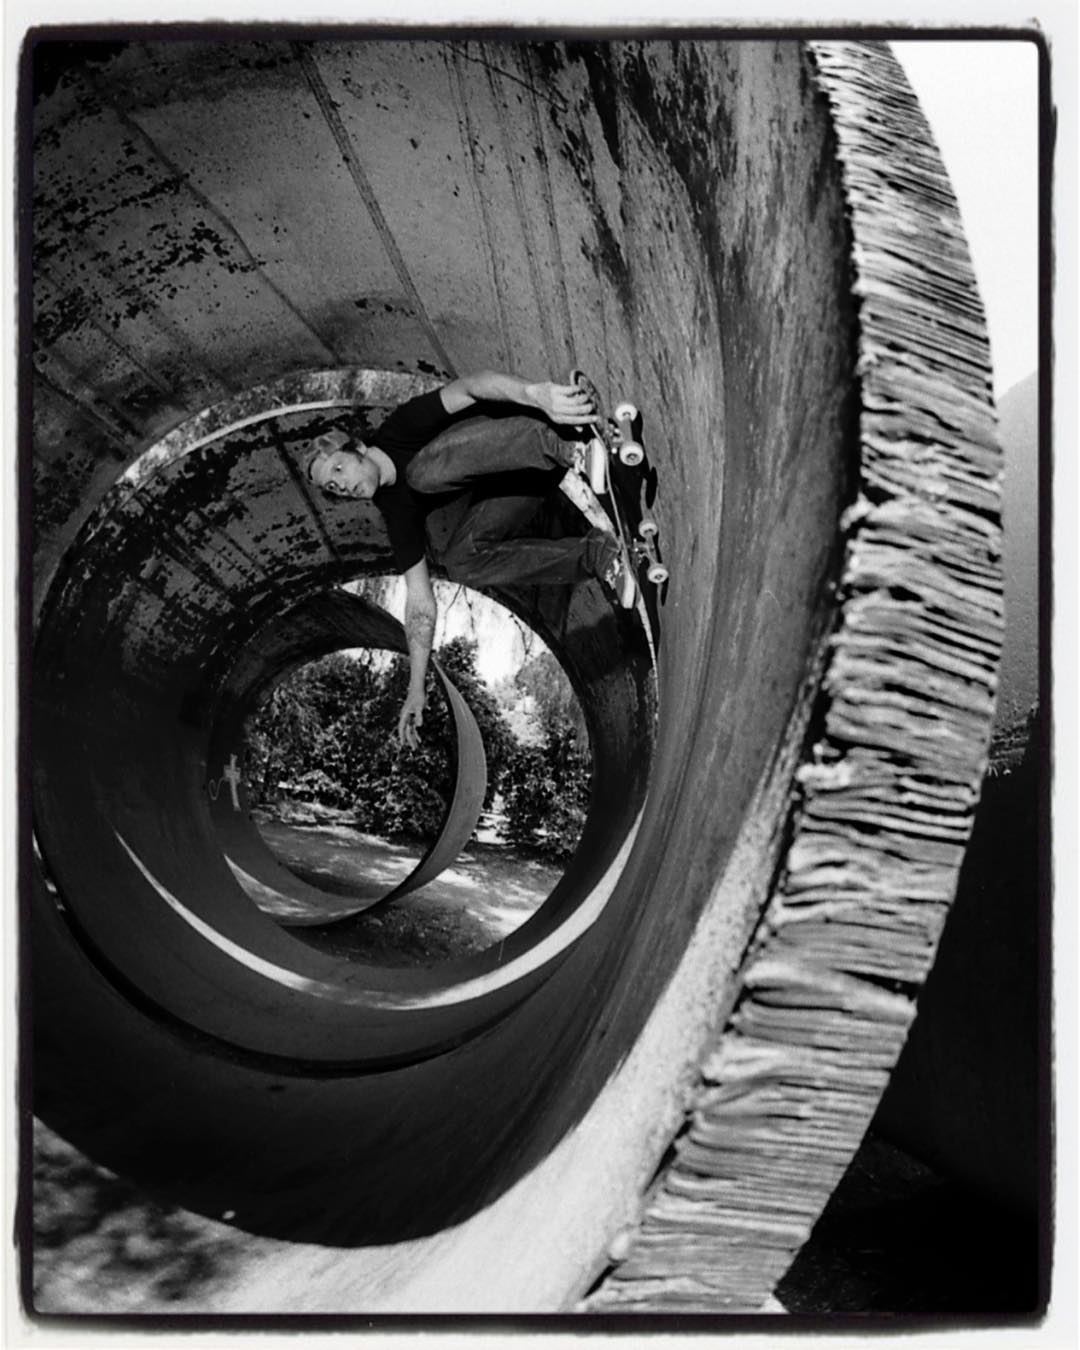 #flashbackfriday Alex Schärfe going oververt at the Pala pipes, 2004 #fullpipe #pipe #skateboarding #pala #minusramps #bailgun #gerdrieger.com